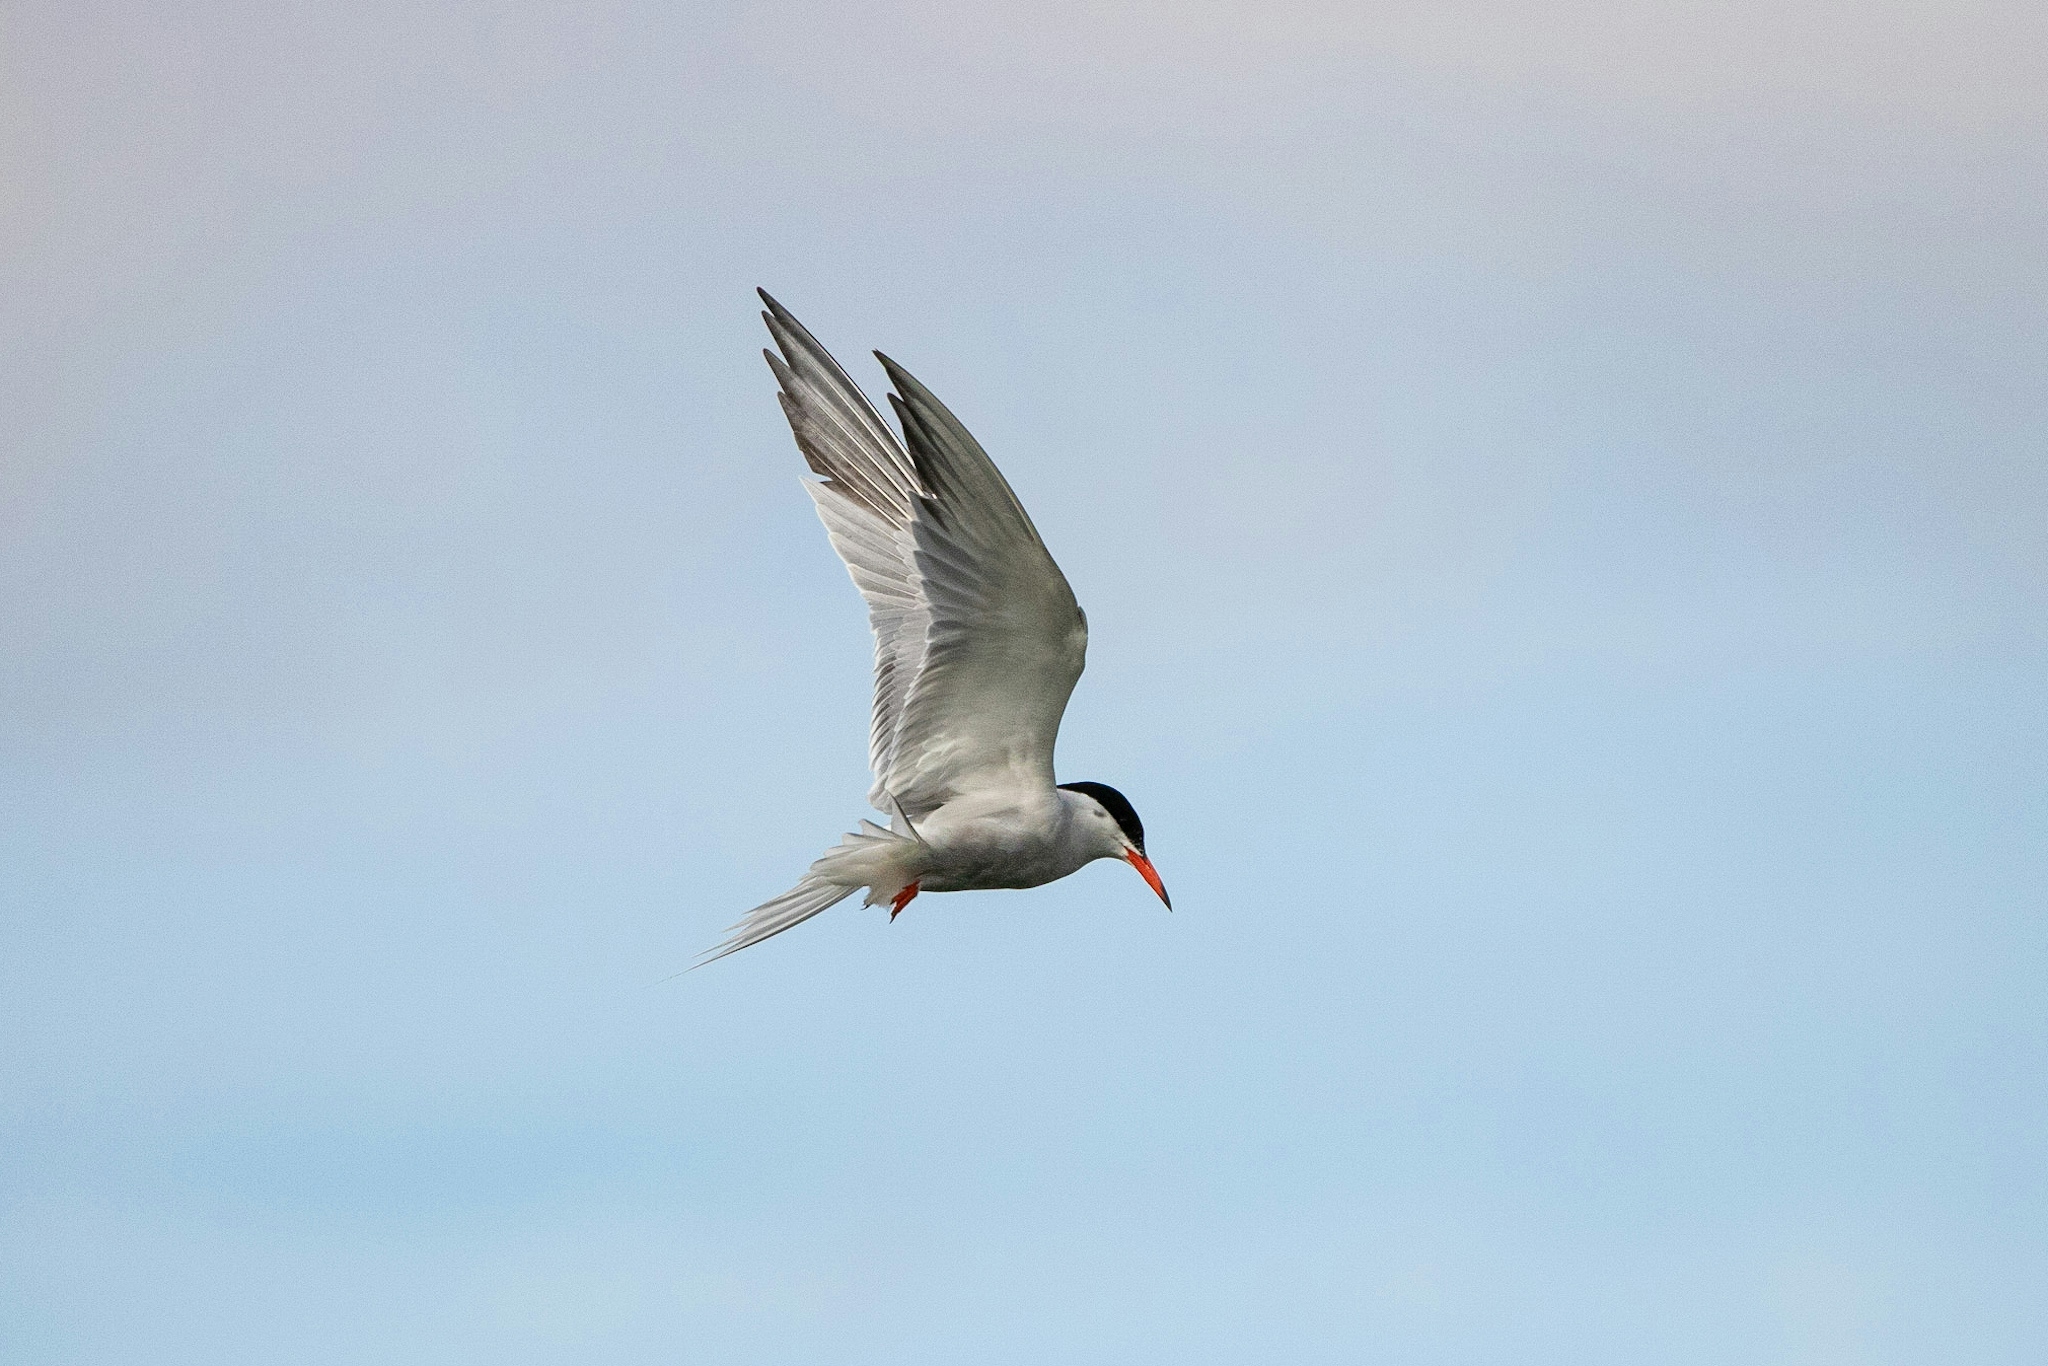 hayley-kinsey-common-tern-in-flight-1